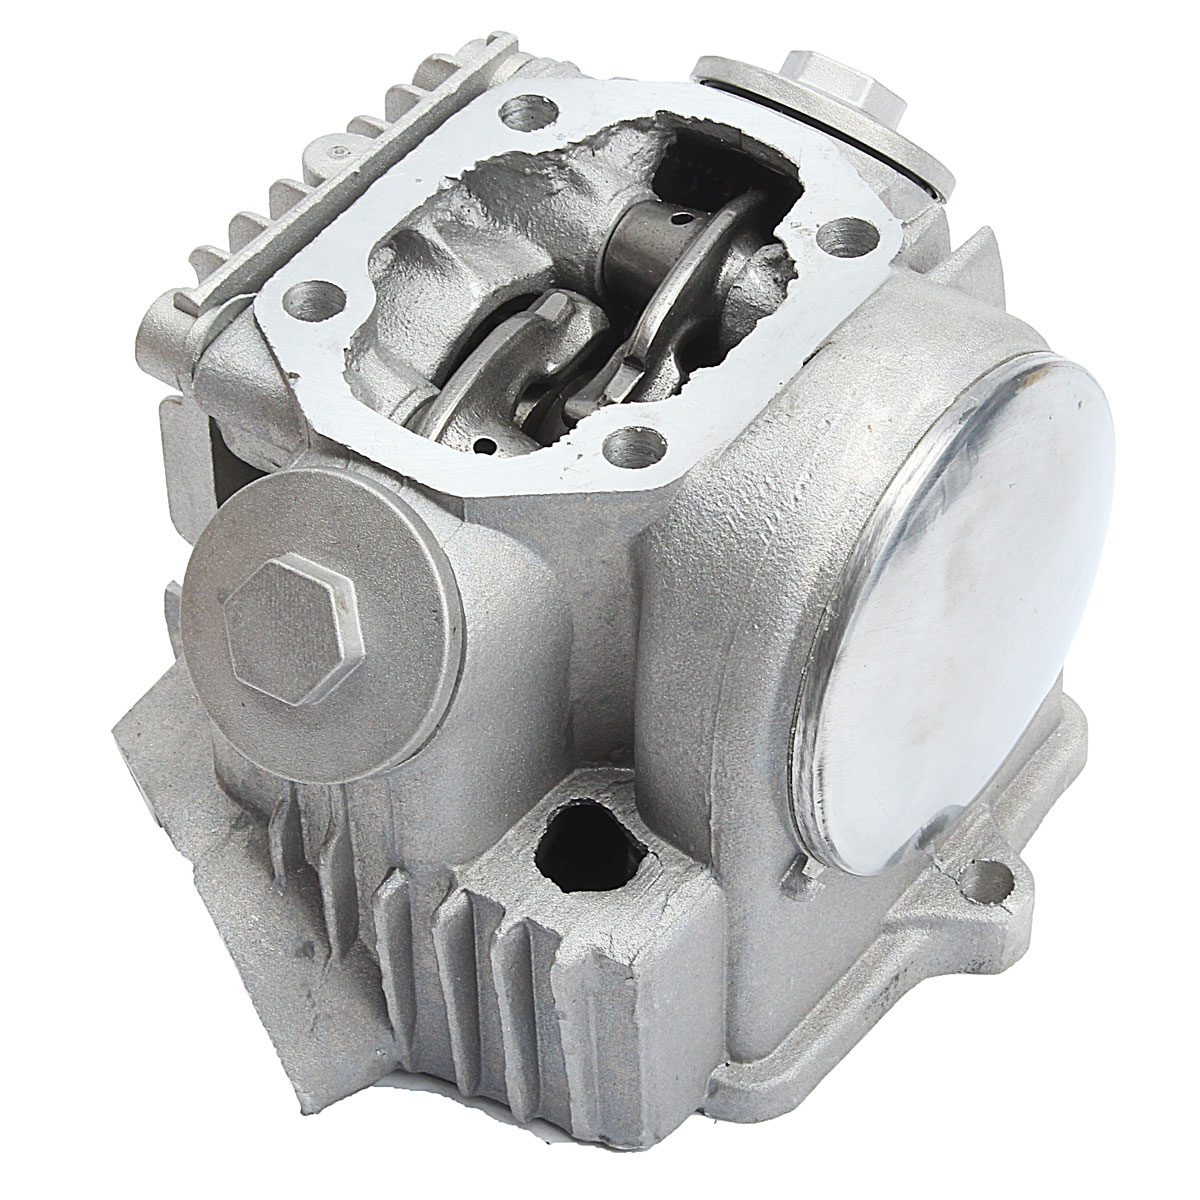 Cylinder Engine Motor Rebuild Kit for Honda ATC70 CT70 TRX70 CRF70 XR70 70Cc